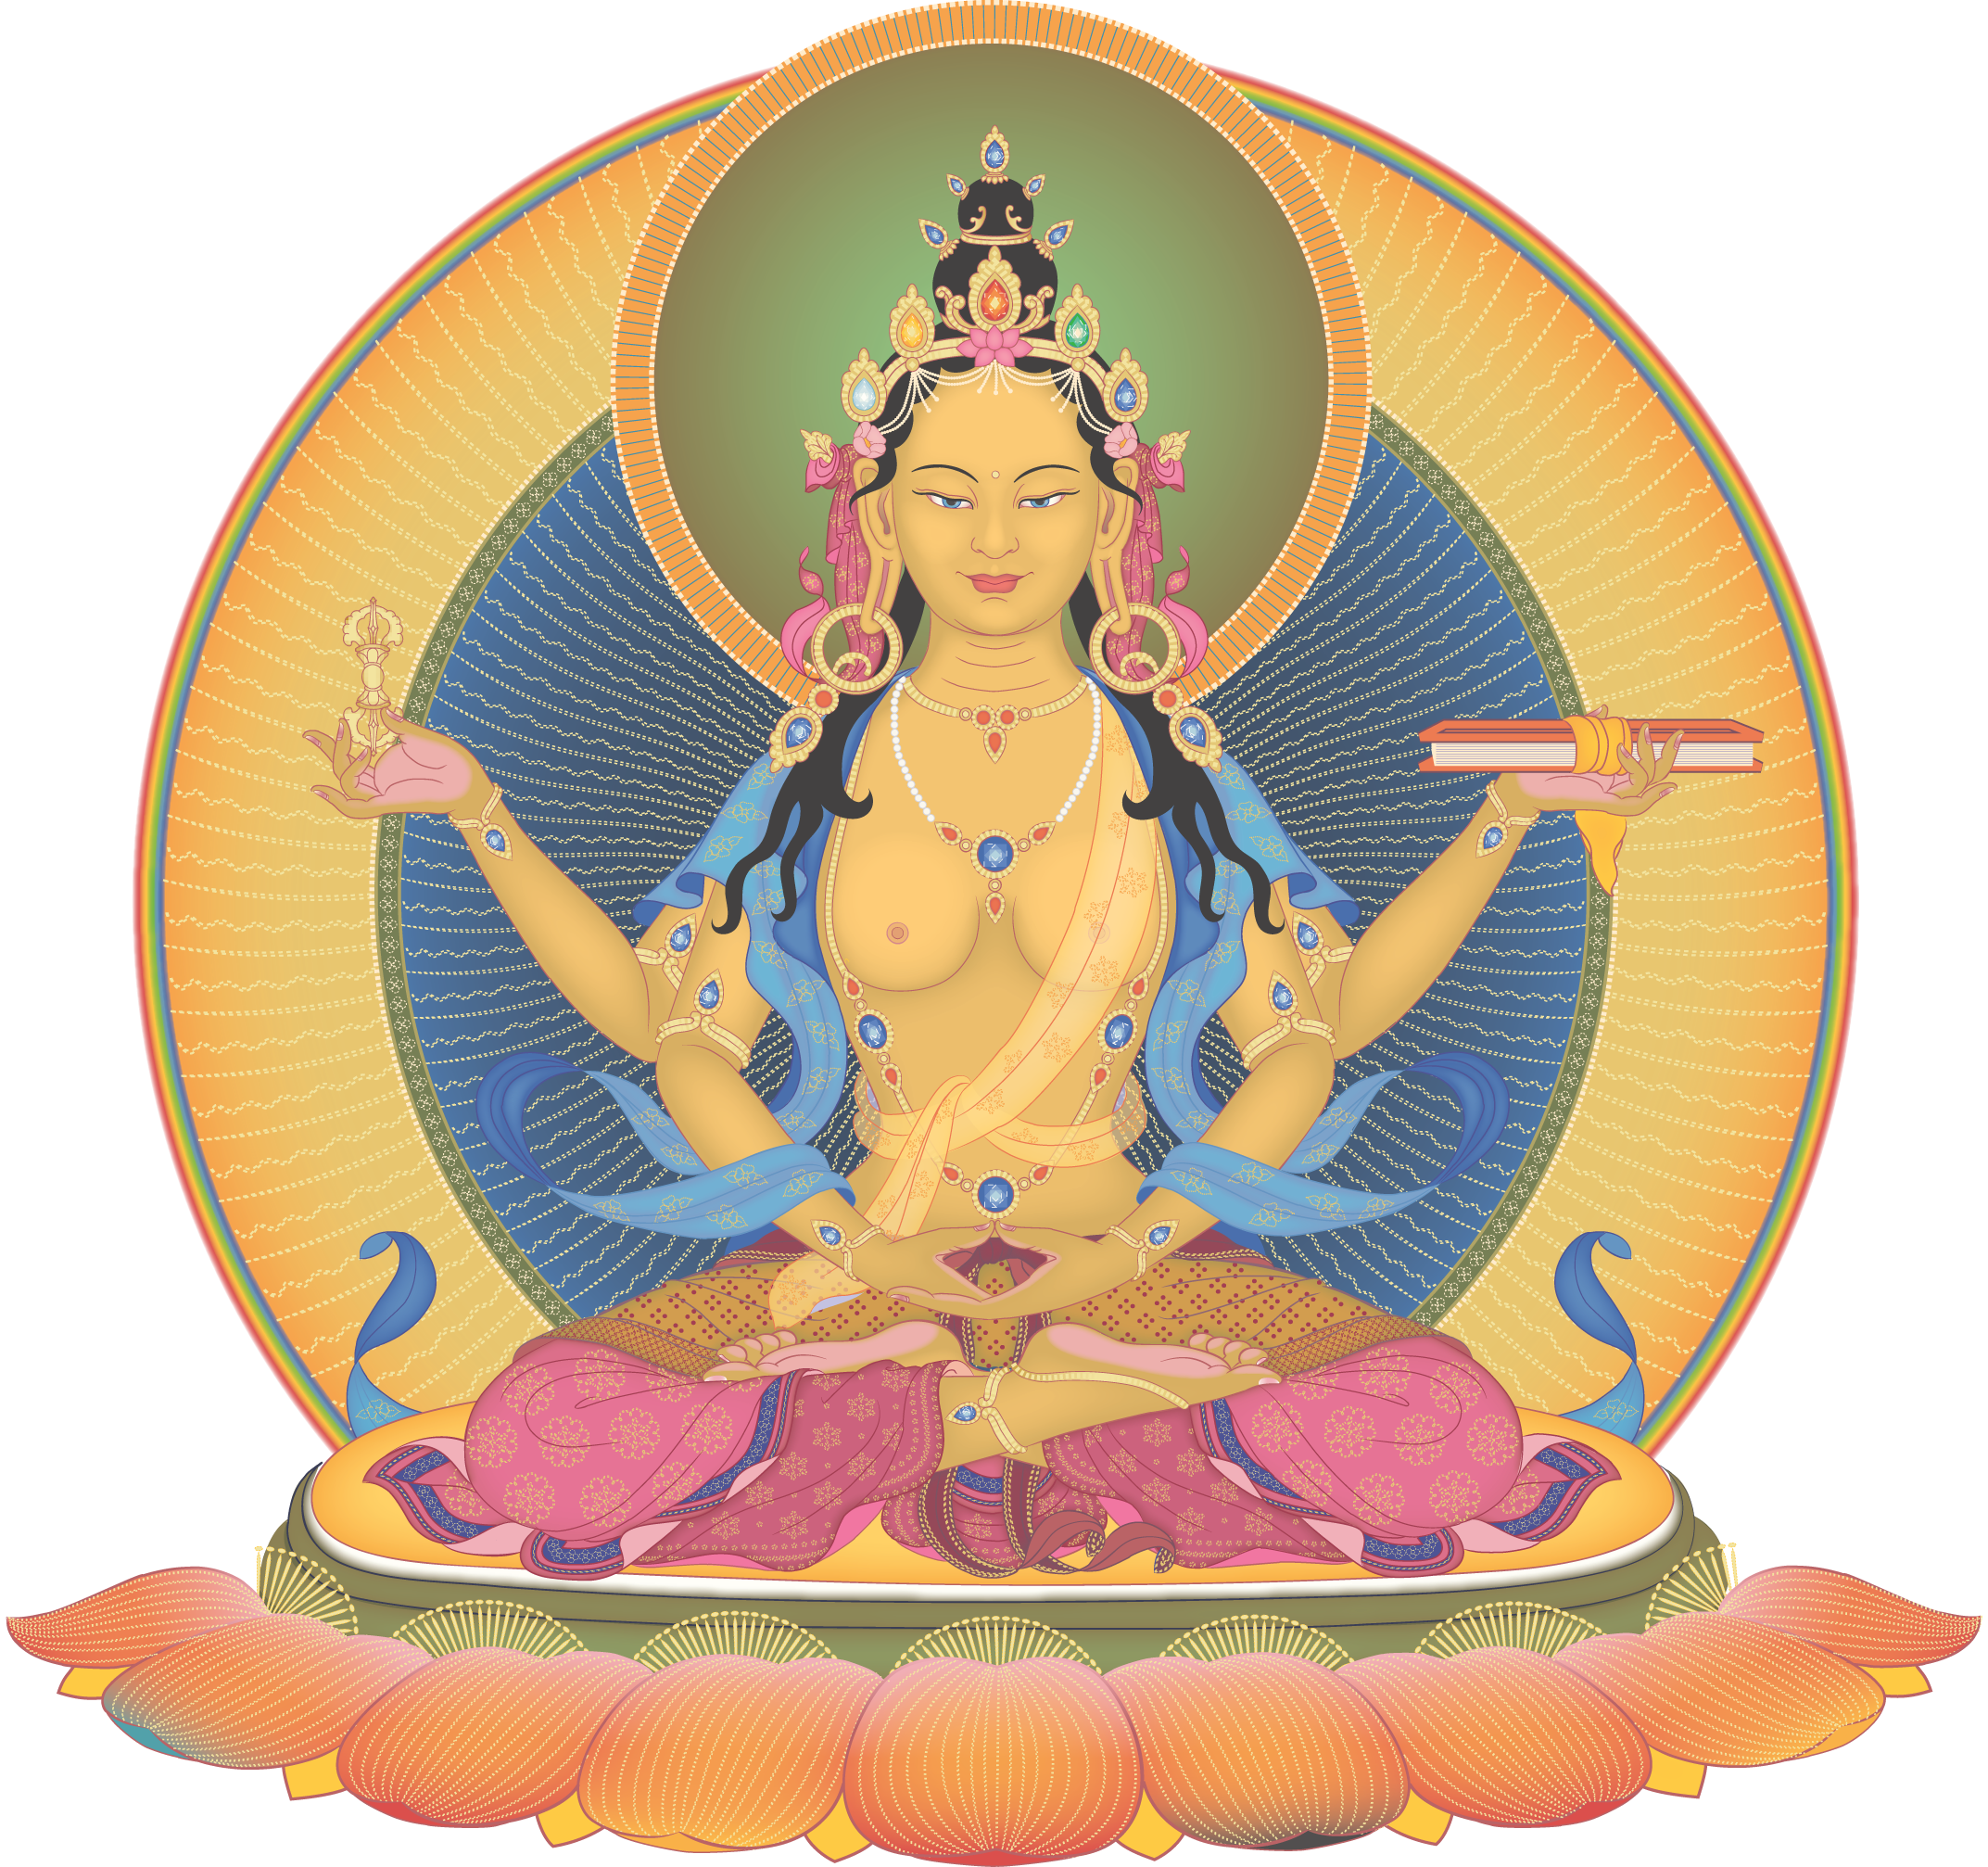 Be Smarter, Be Wiser, Be More Successful:
The Empowerment of Wisdom Buddha Prajnaparamita